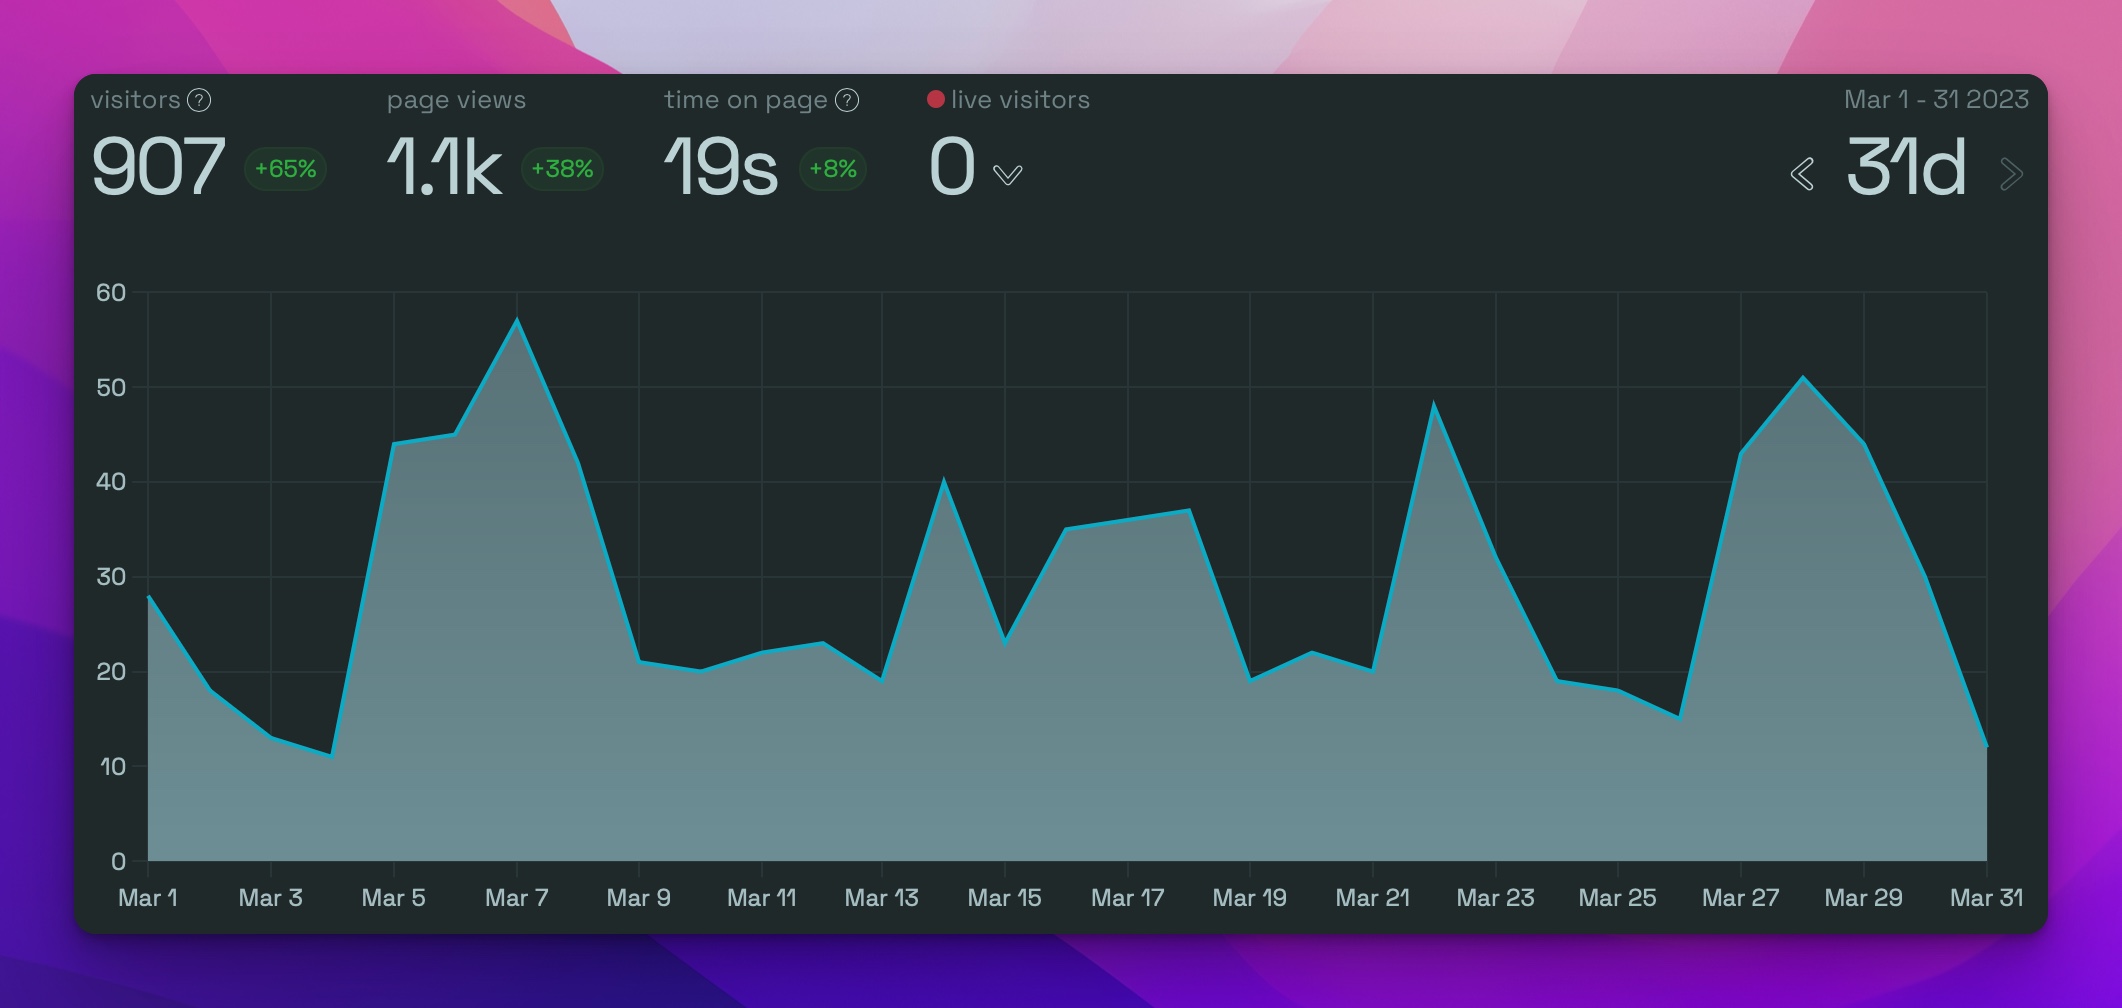 SwiftStarterKits metrics are way up!